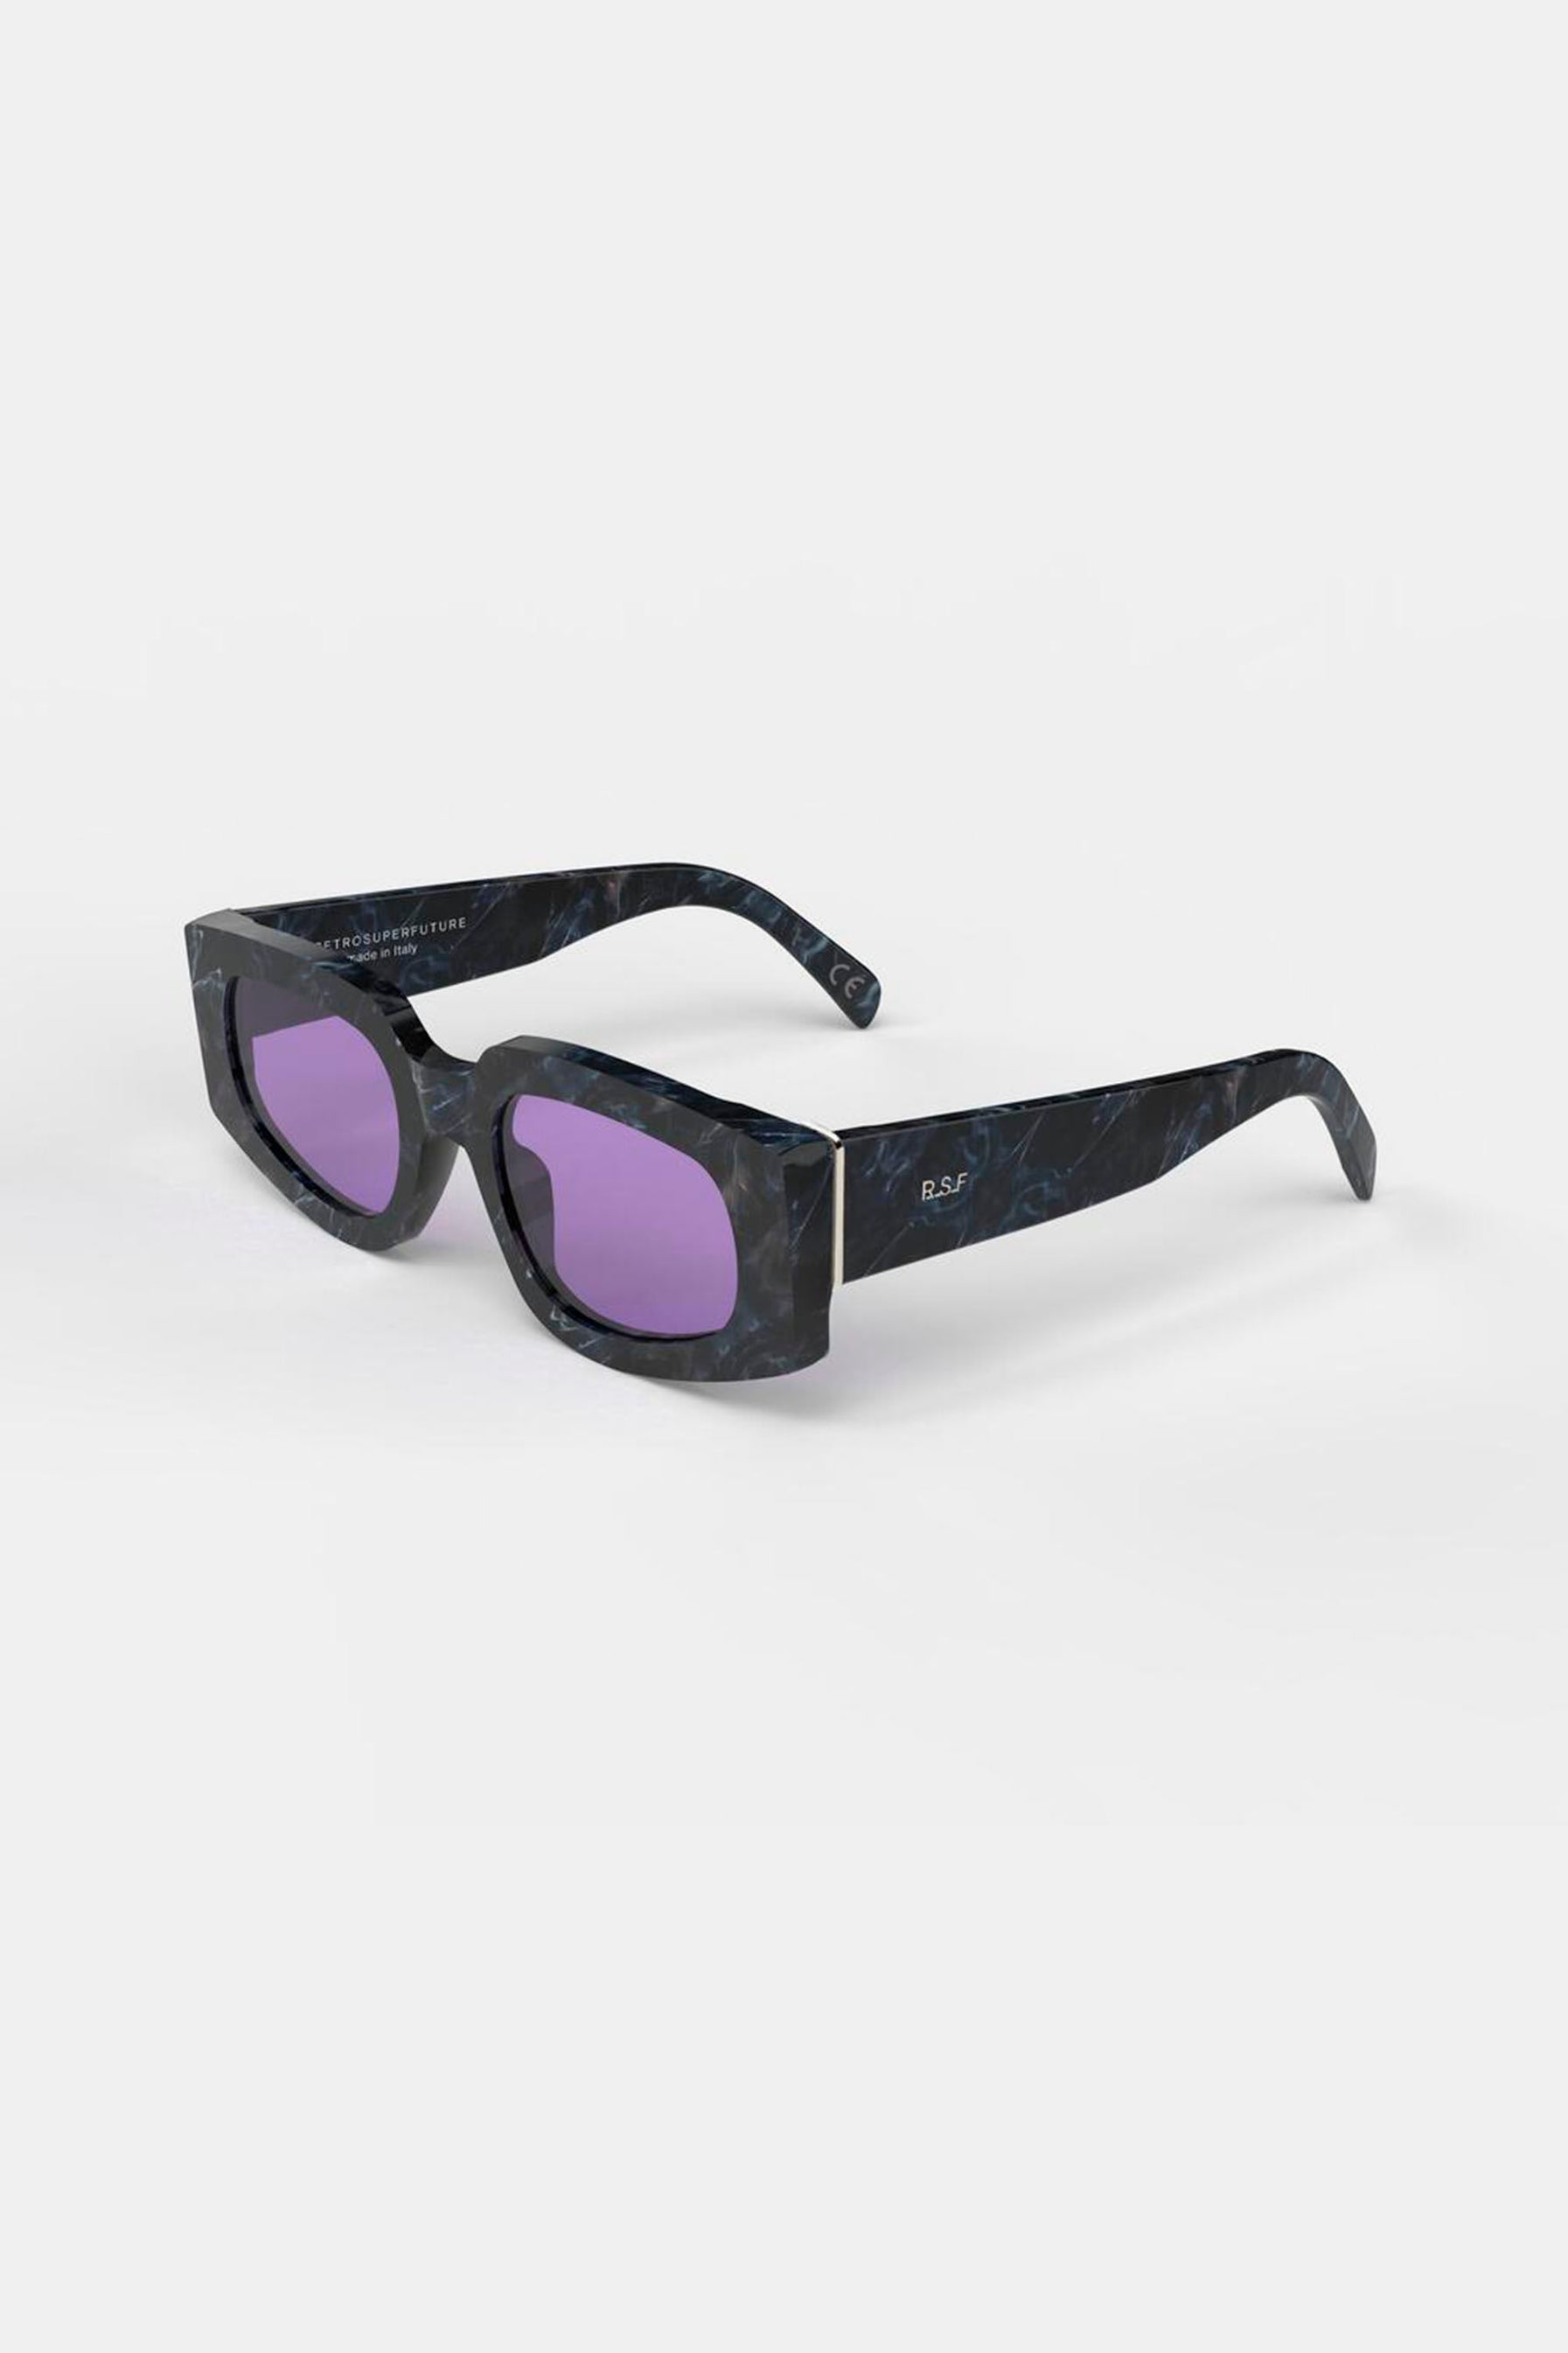 Retrosuperfuture tetra marble acetate sunglasses - Eyewear Club